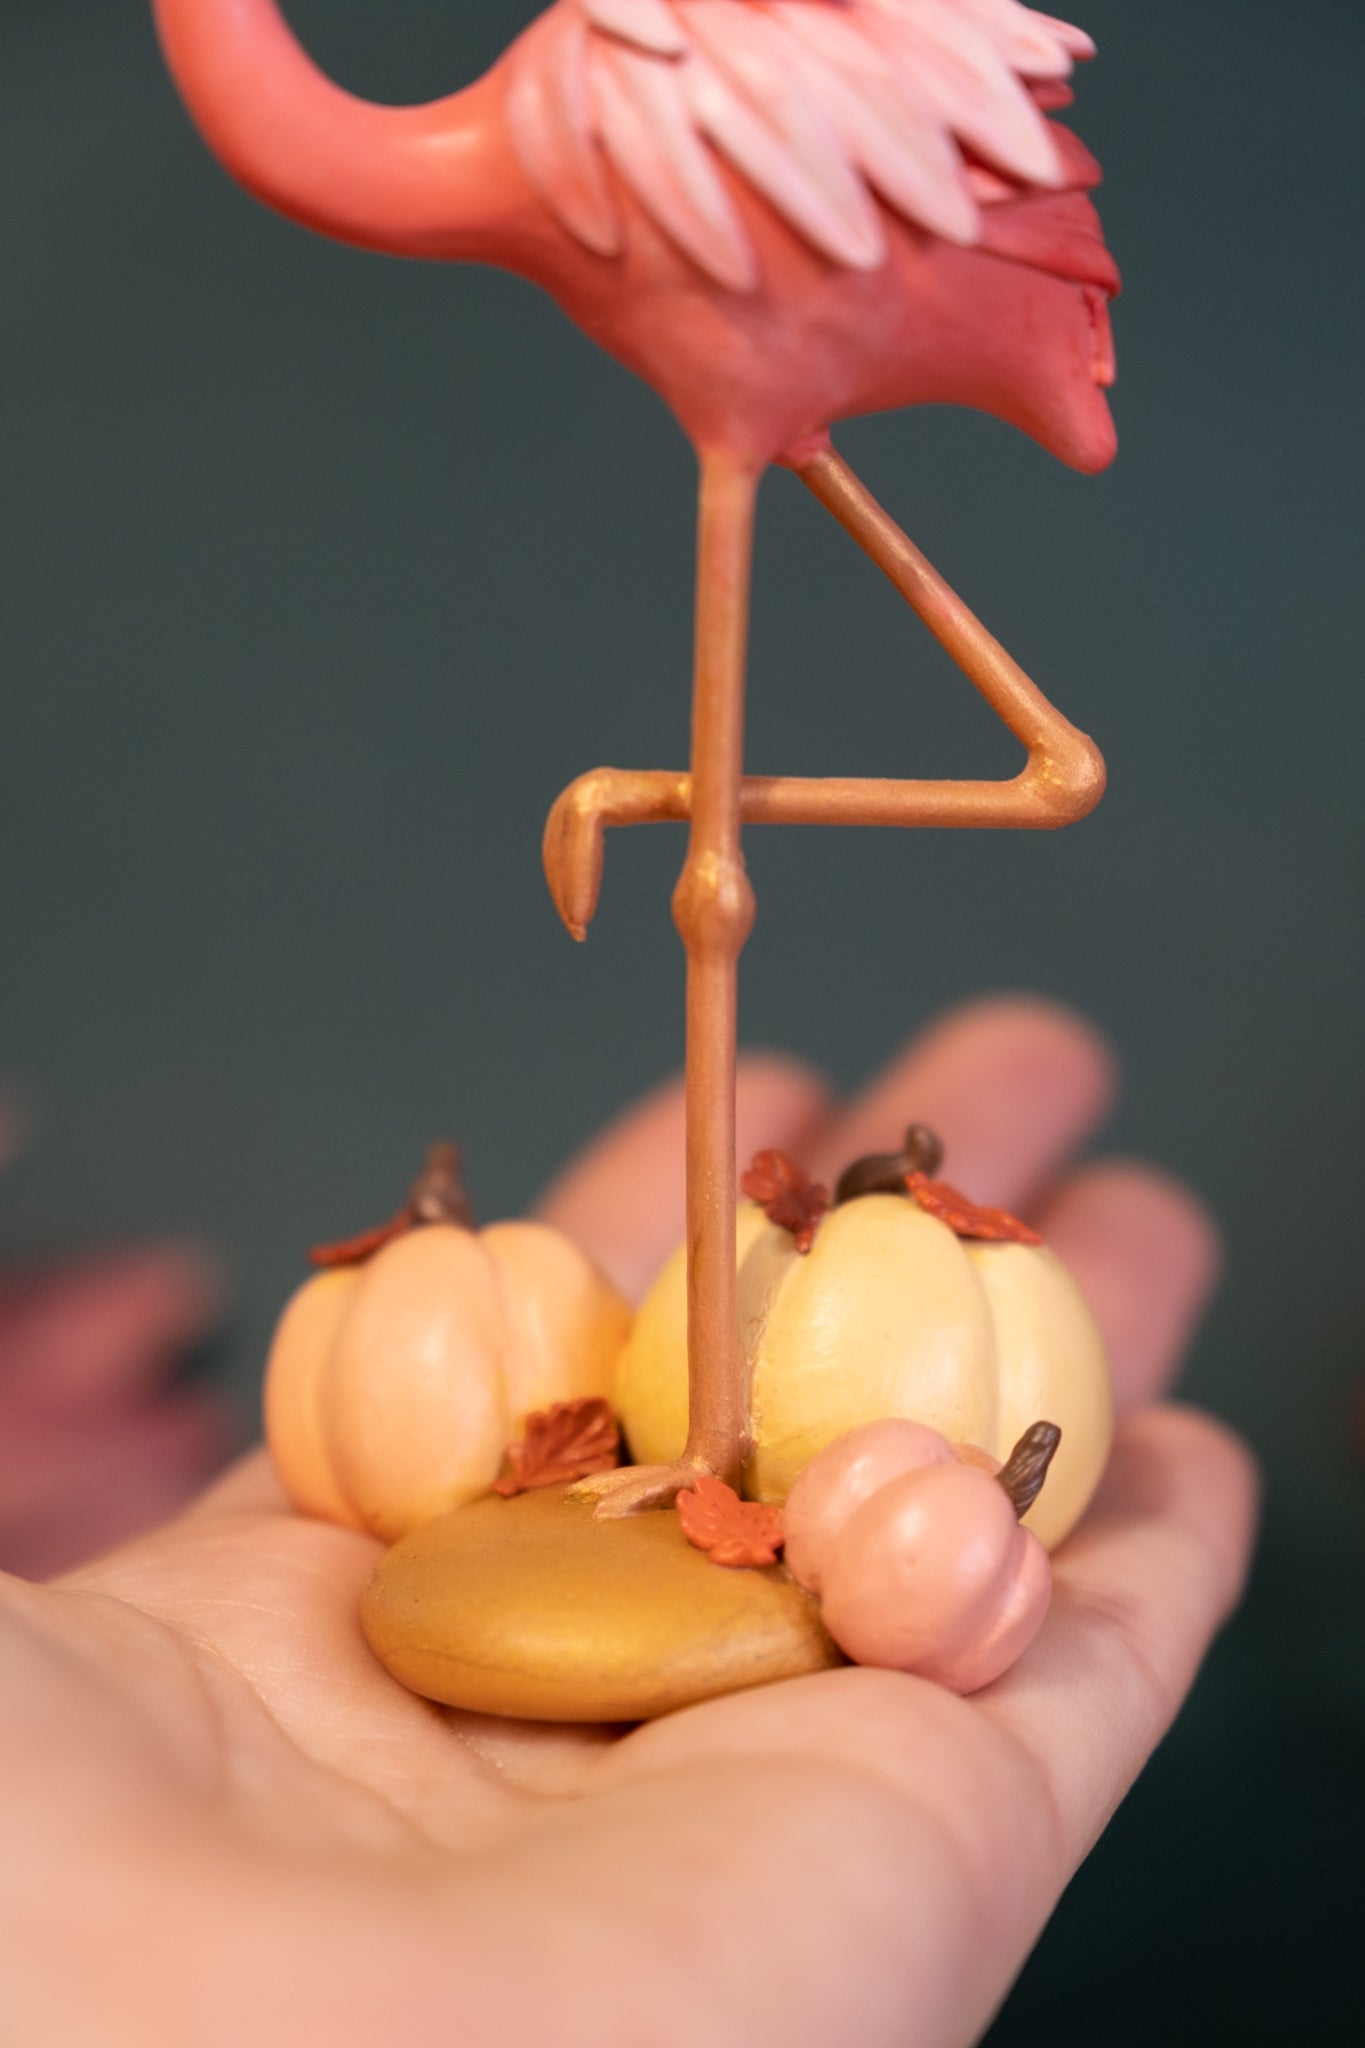 Halloween Flamingo Sculpture in Polymer Clay